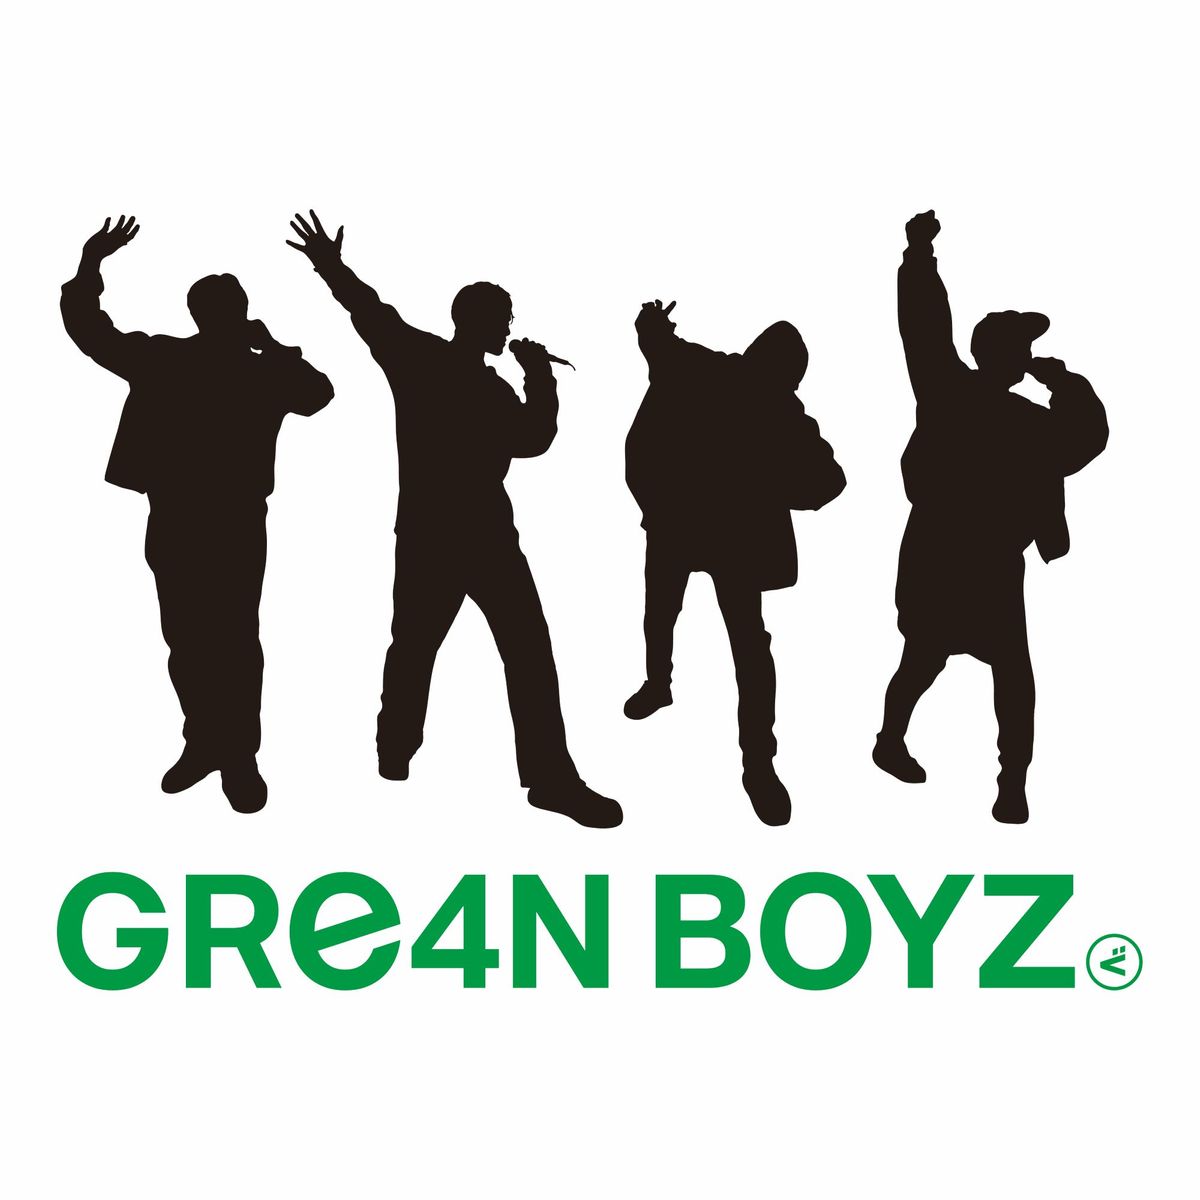 GReeeeNが『GRe4N BOYZ』に改名へ「新たな挑戦をしていく」　事務所退所も報告　